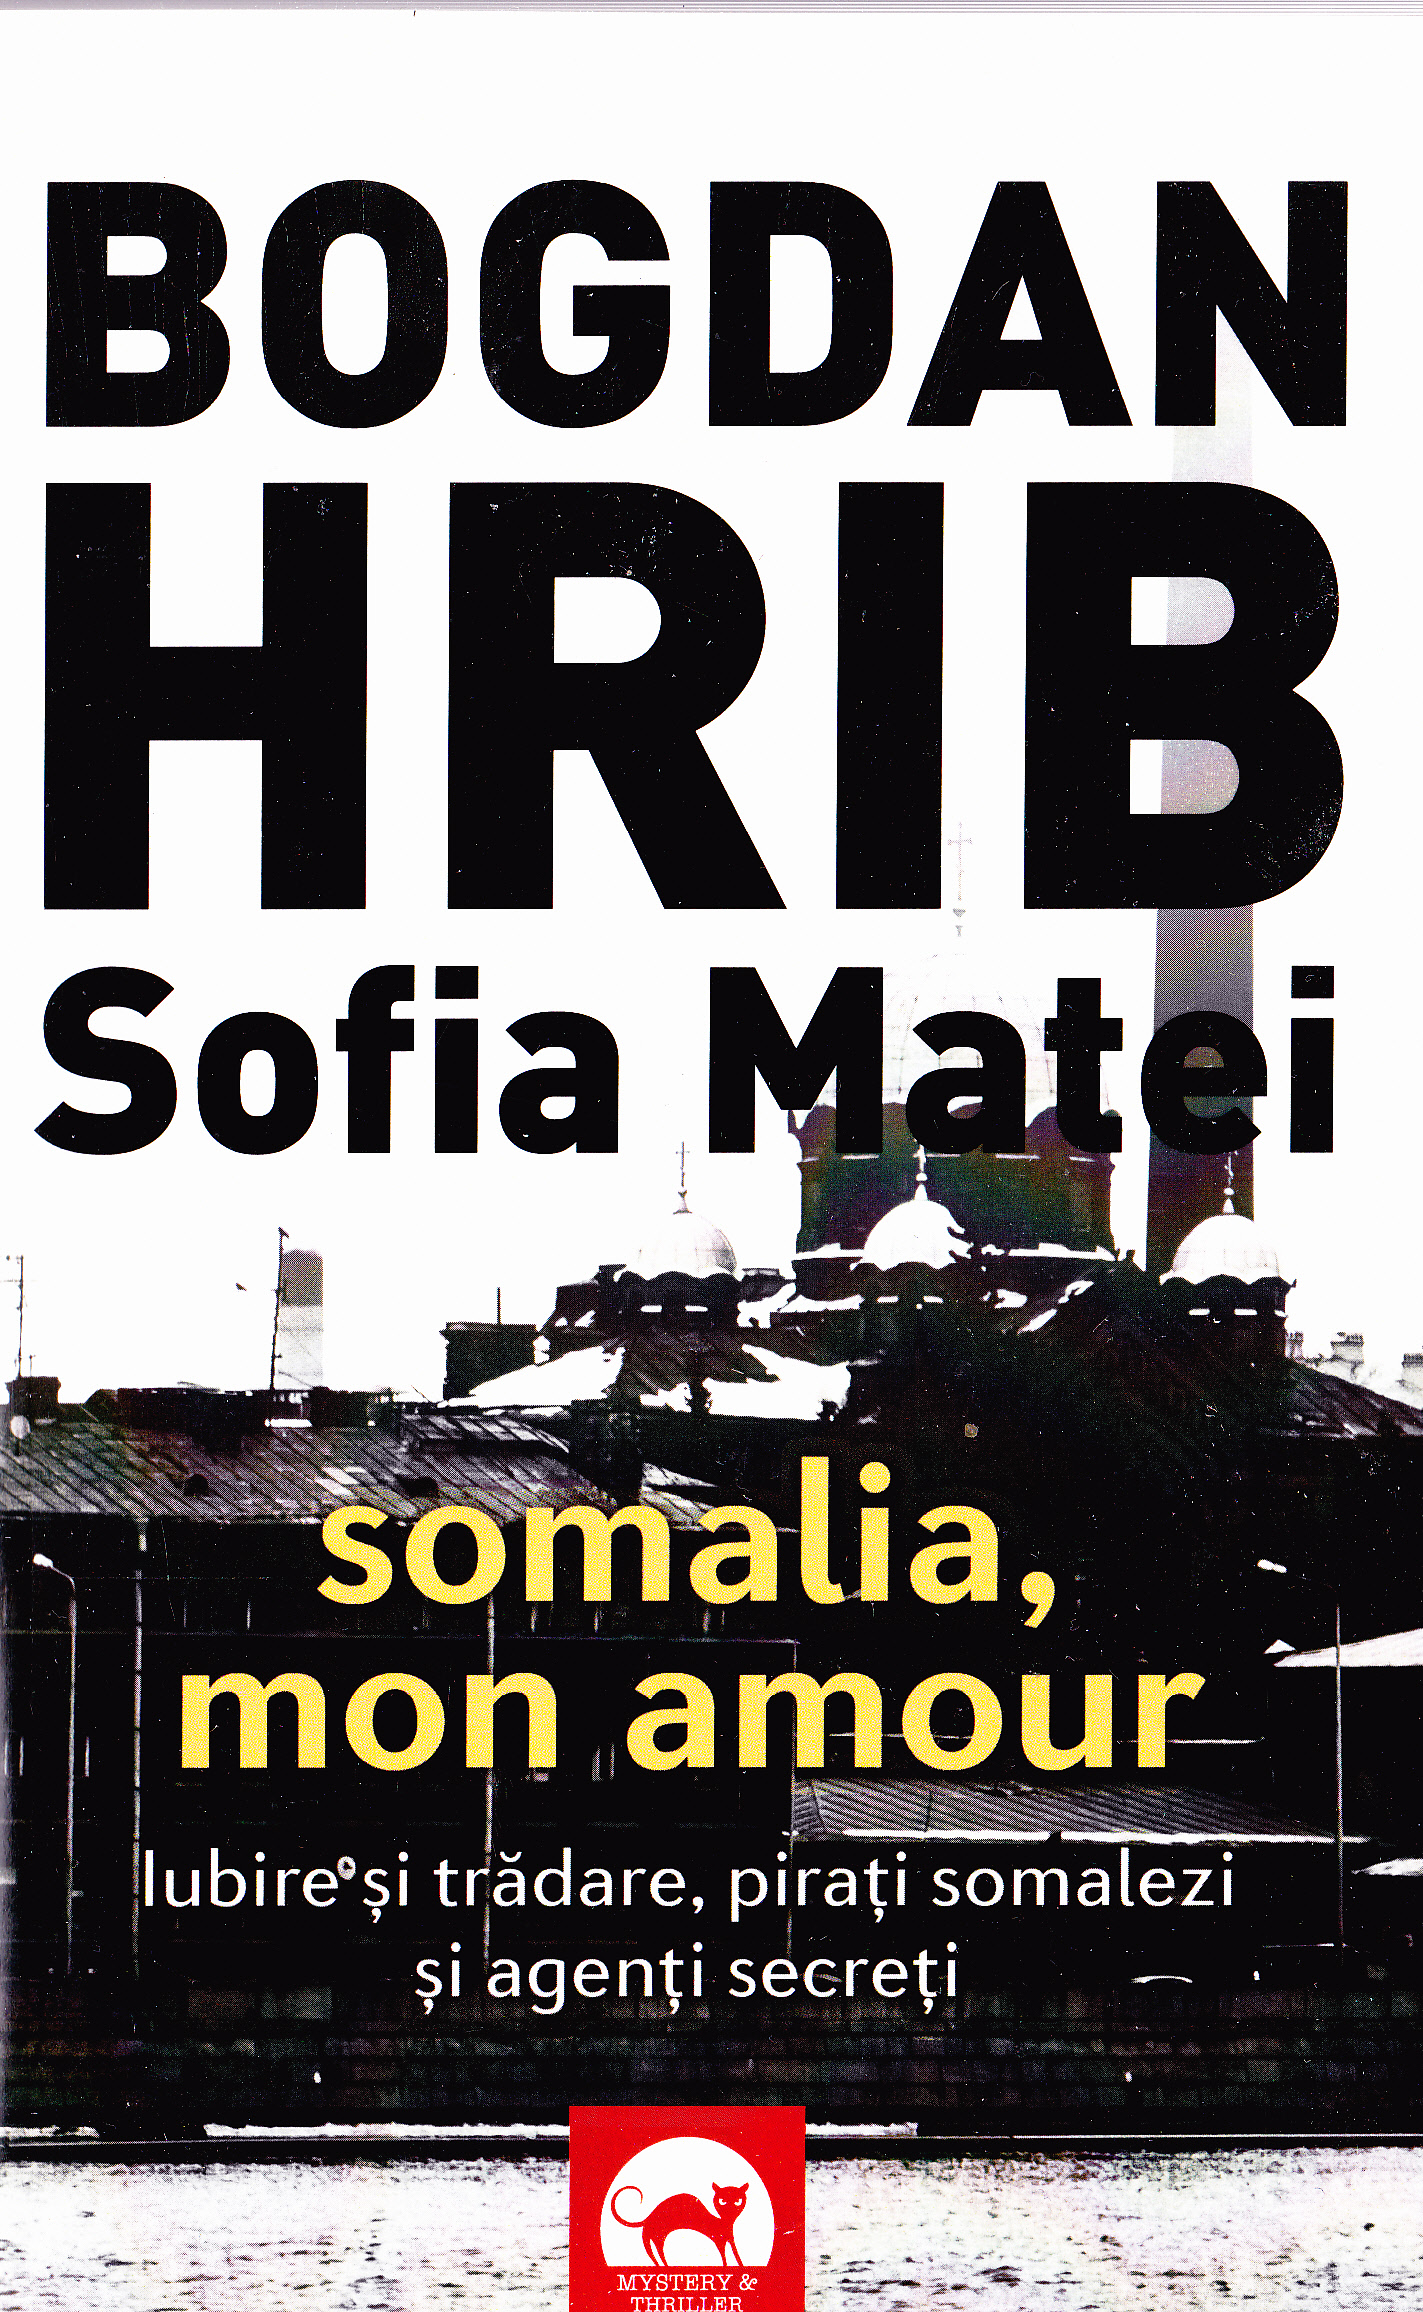 Somalia, mon amour - Bogdan Hrib, Sofia Matei